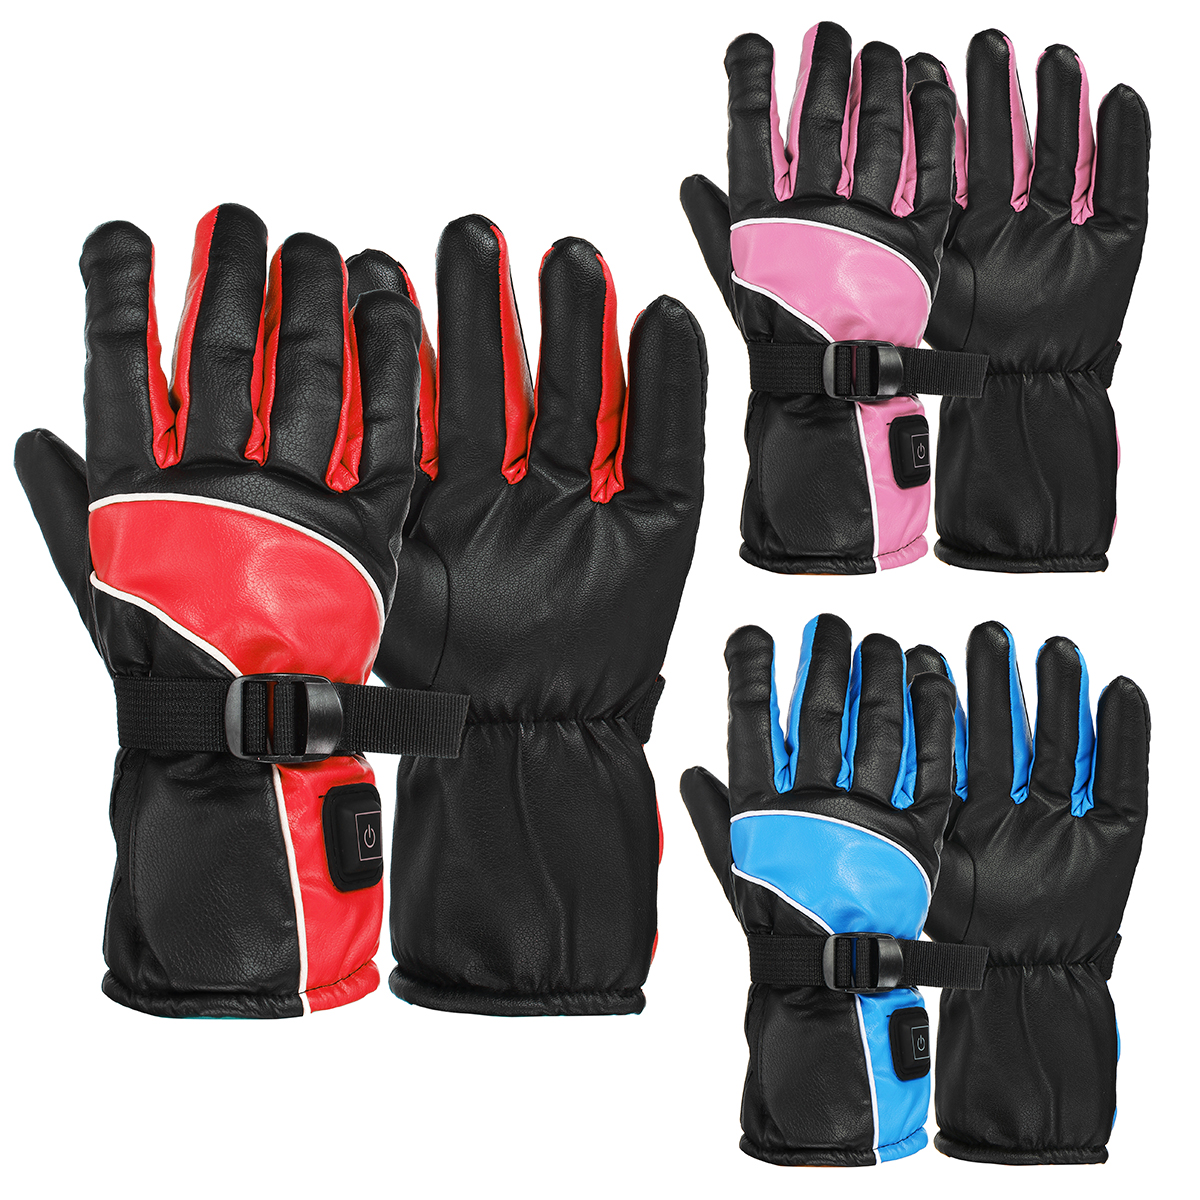 

Men Women 3 Gear Winter Heated Gloves Skiing Waterproof Mittens Thermal Snowboard Motorcycle Riding